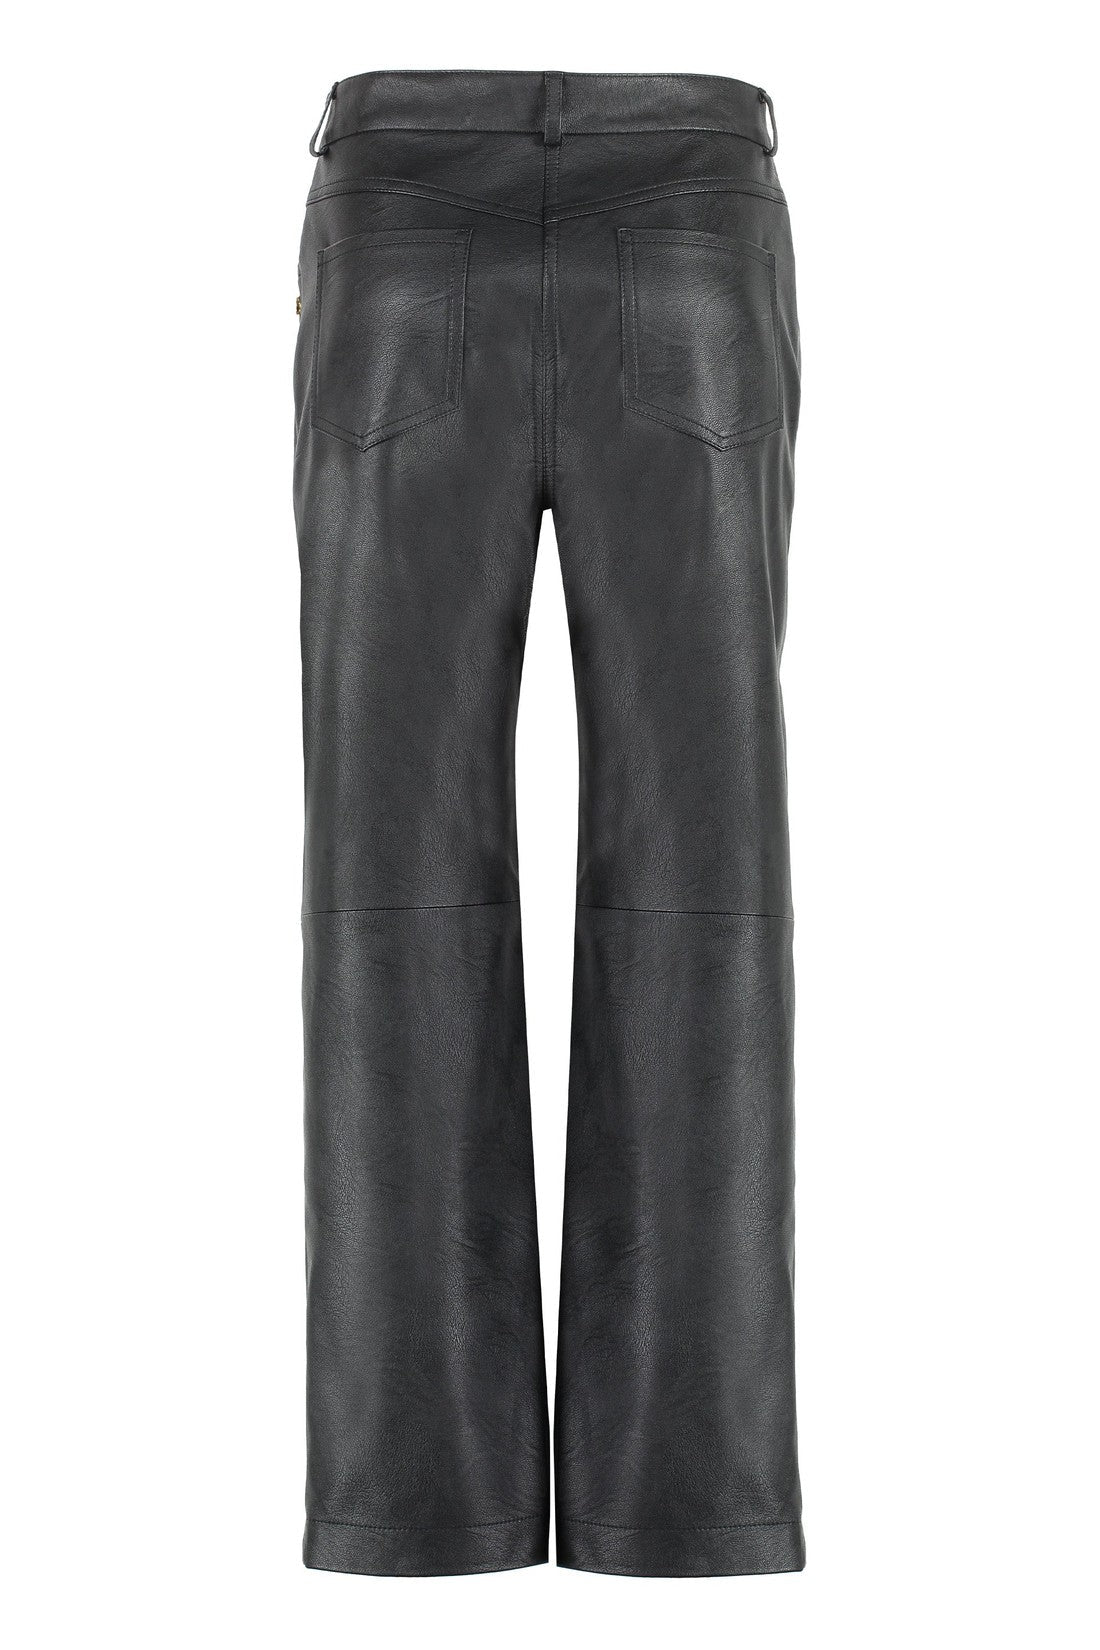 Stella McCartney-OUTLET-SALE-Alter Mat faux leather trousers-ARCHIVIST